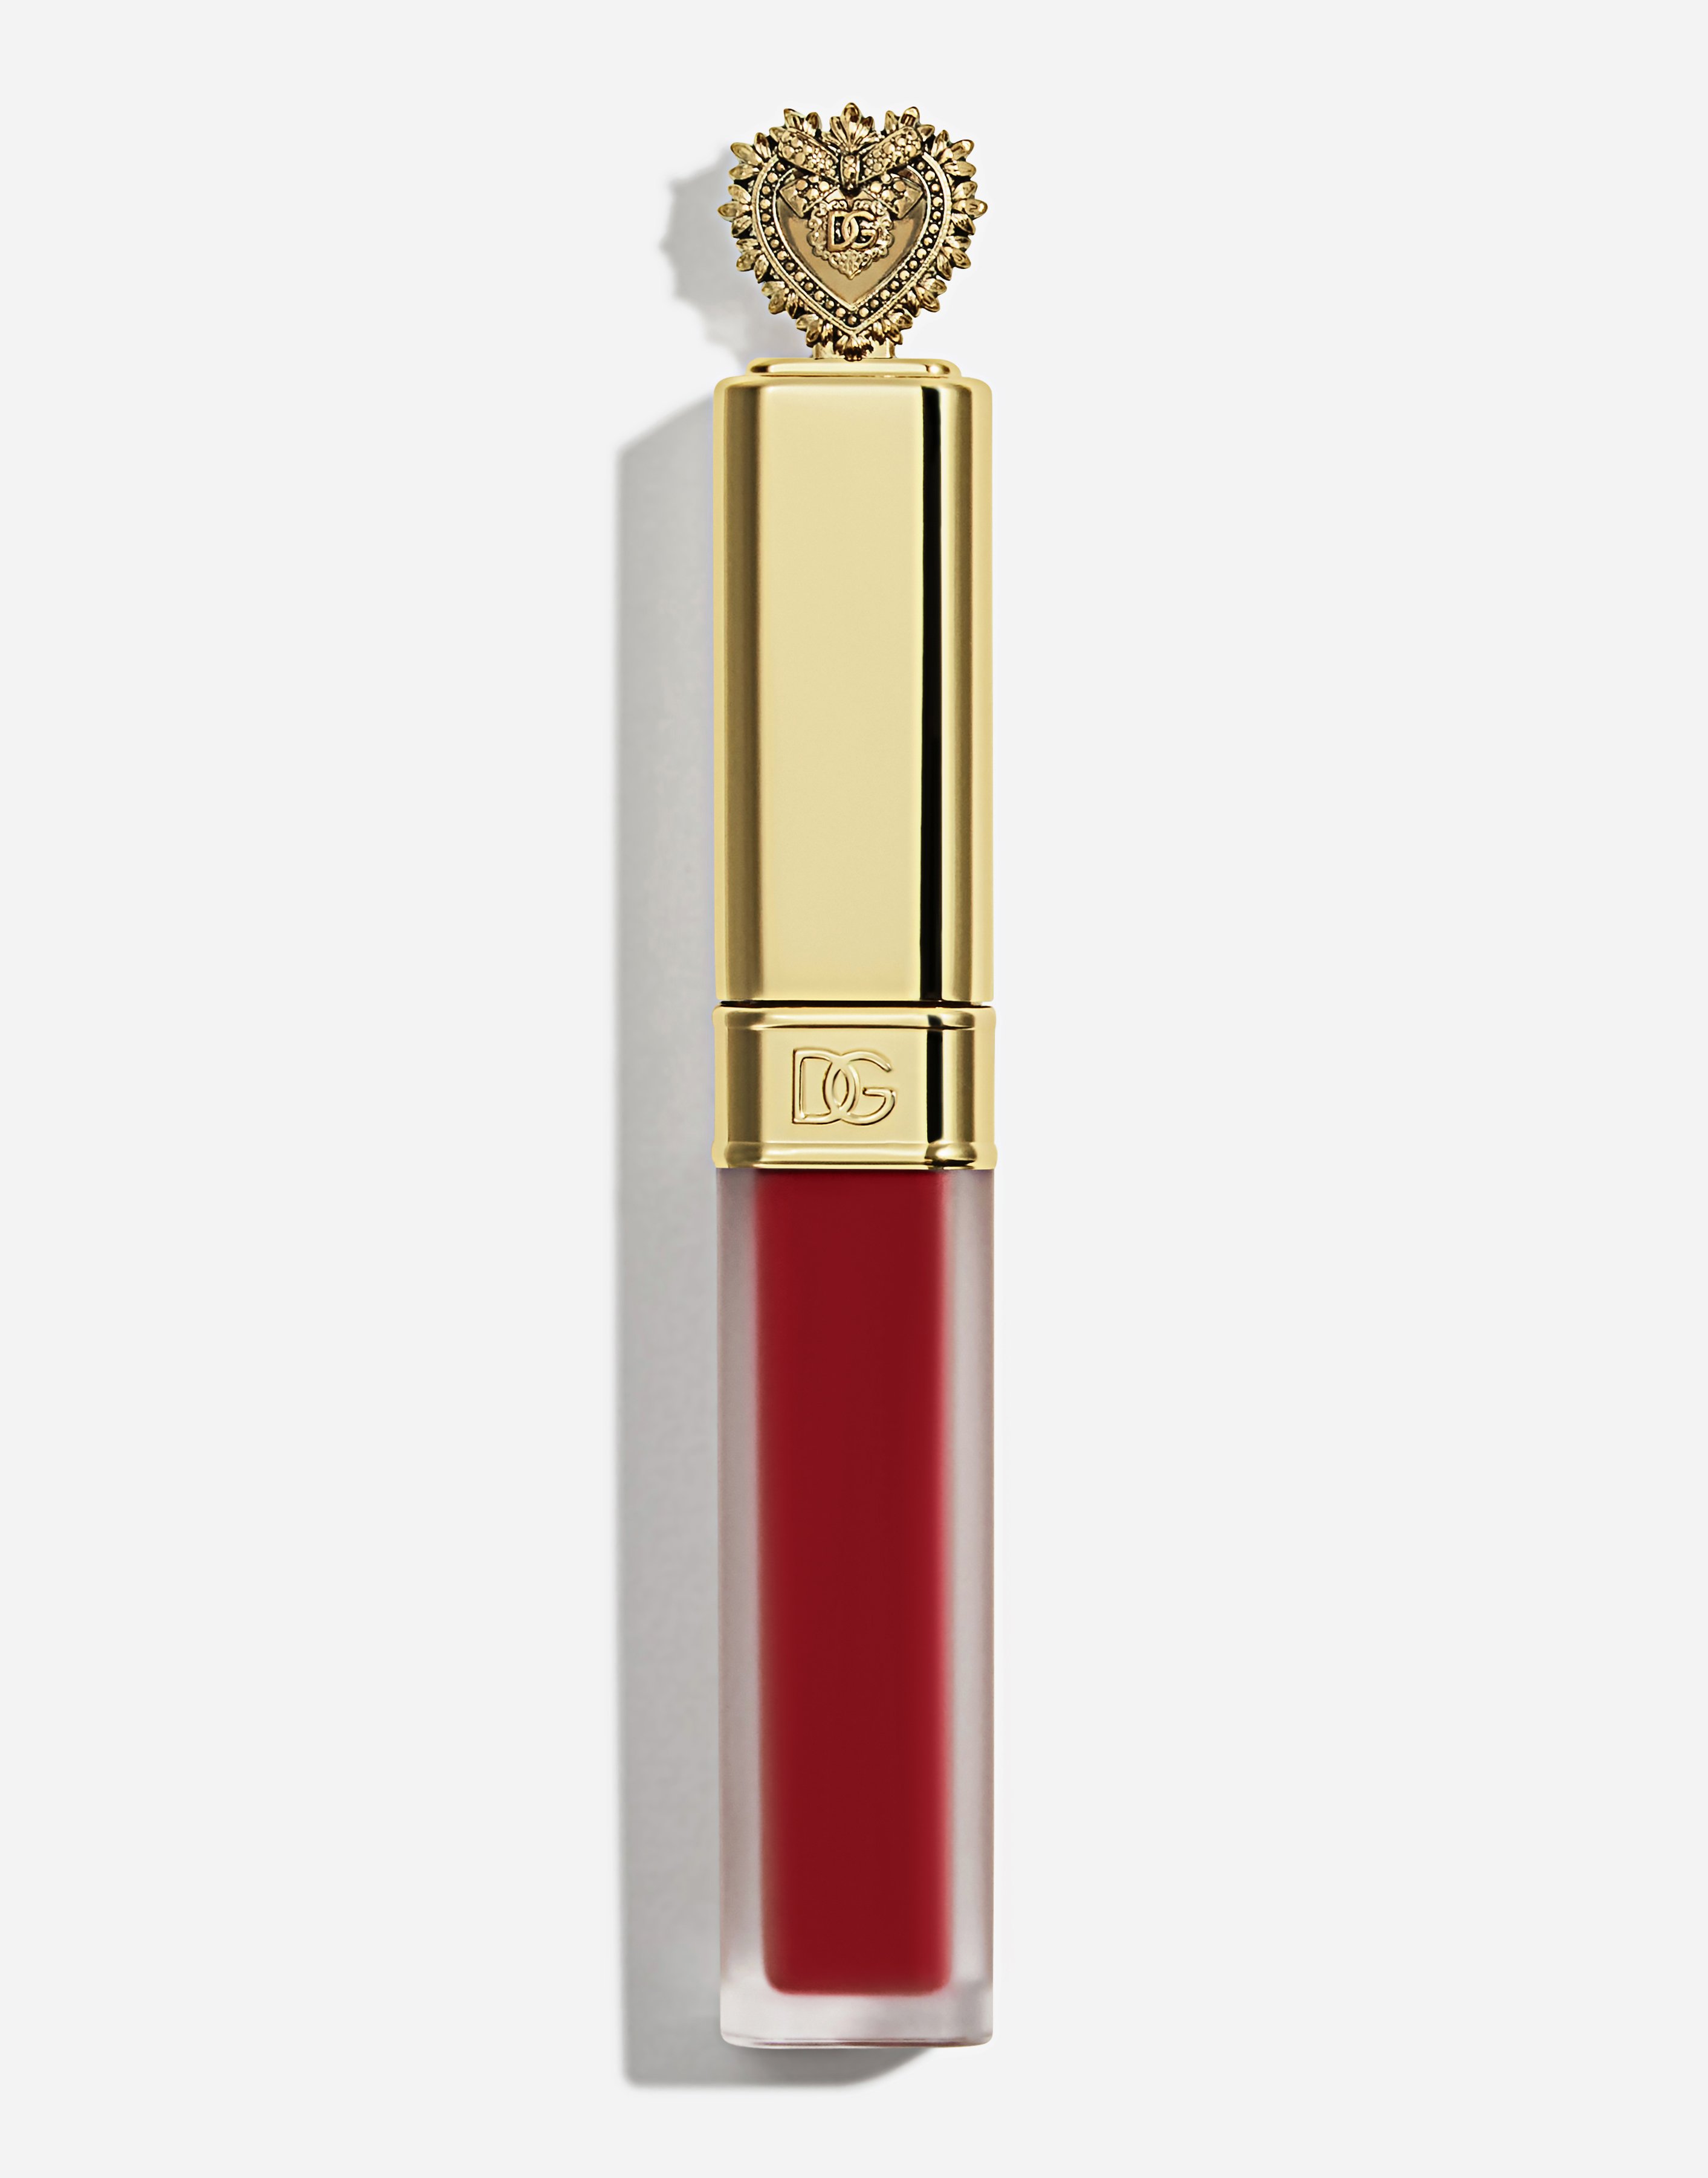 Dolce & Gabbana Devotion Liquid Lipstick In Mousse In 410 Audacia